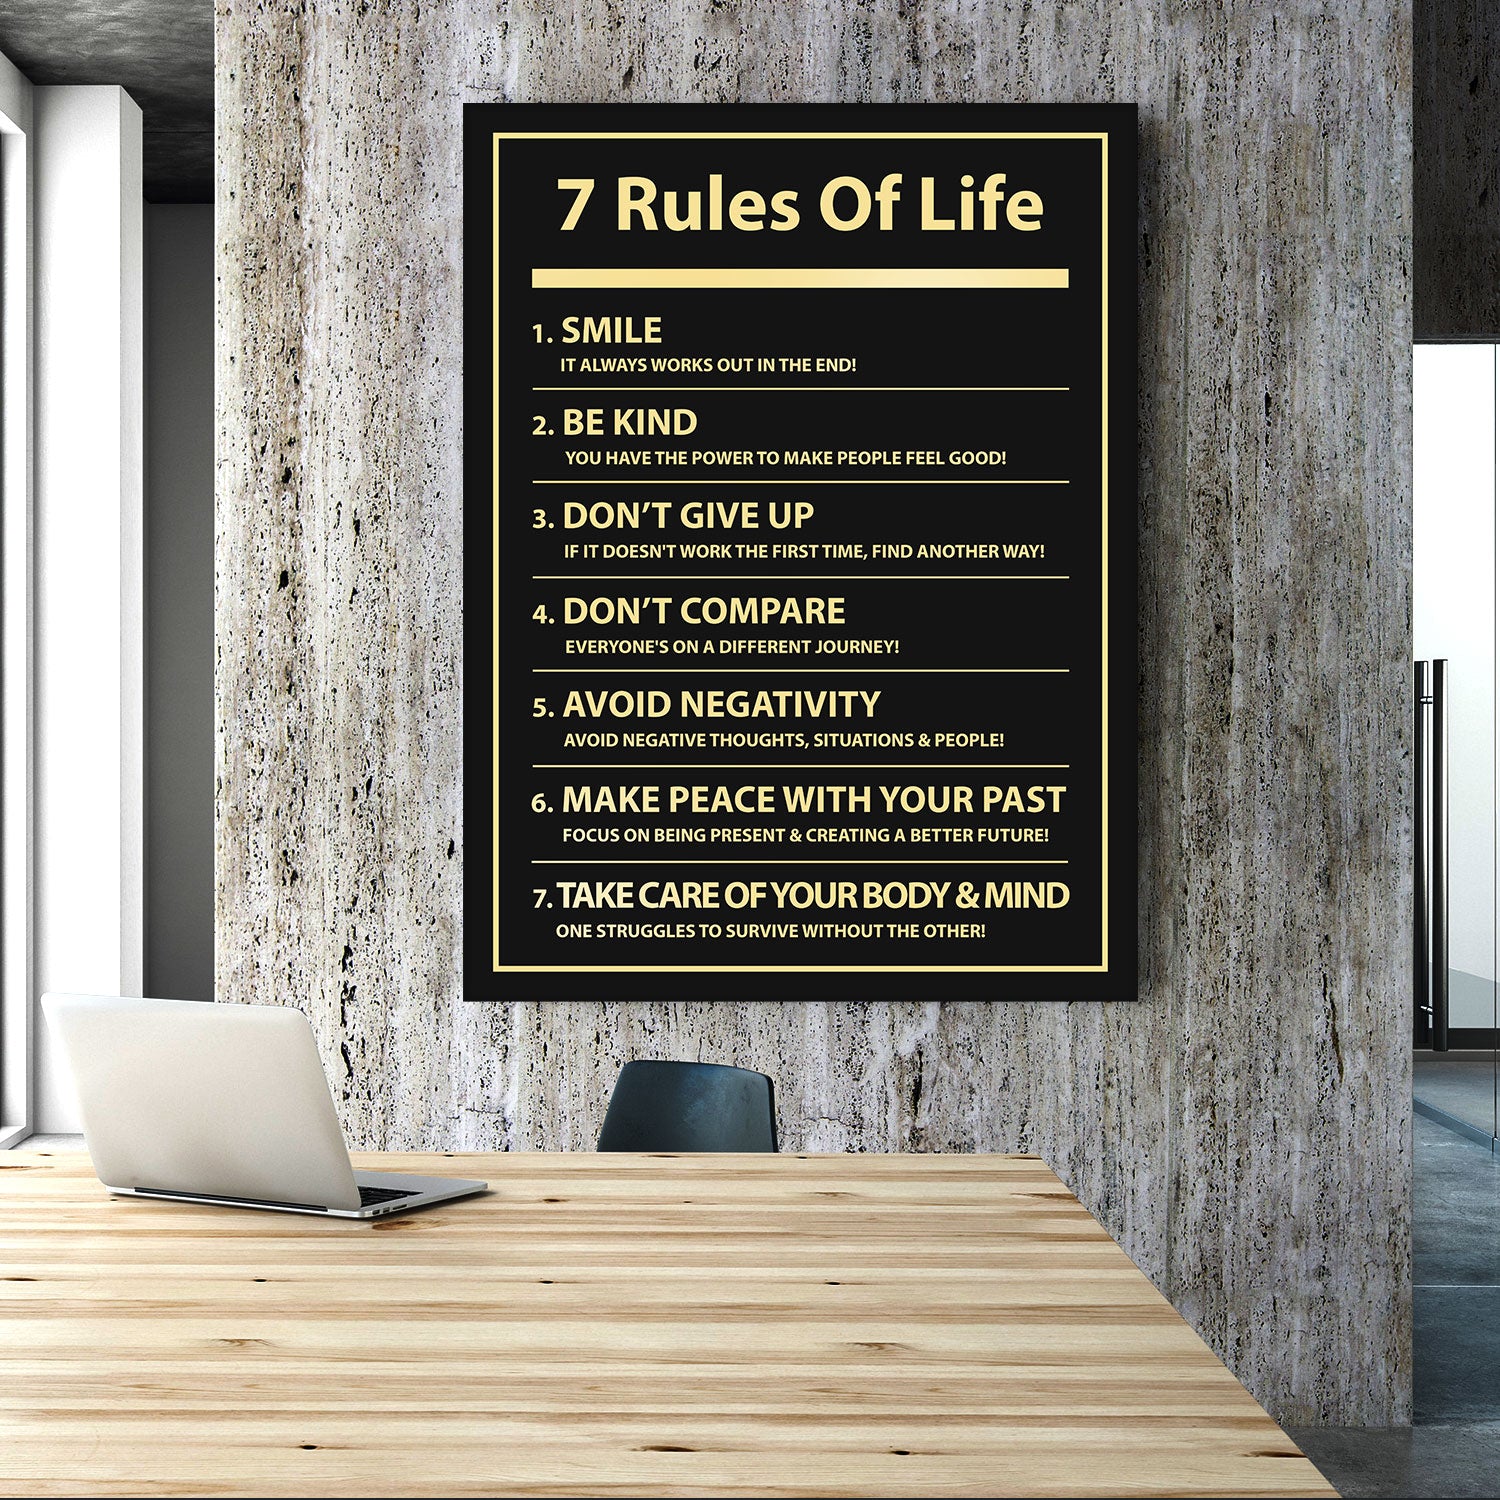 7 Rules Of Life - Success Hunters Prints